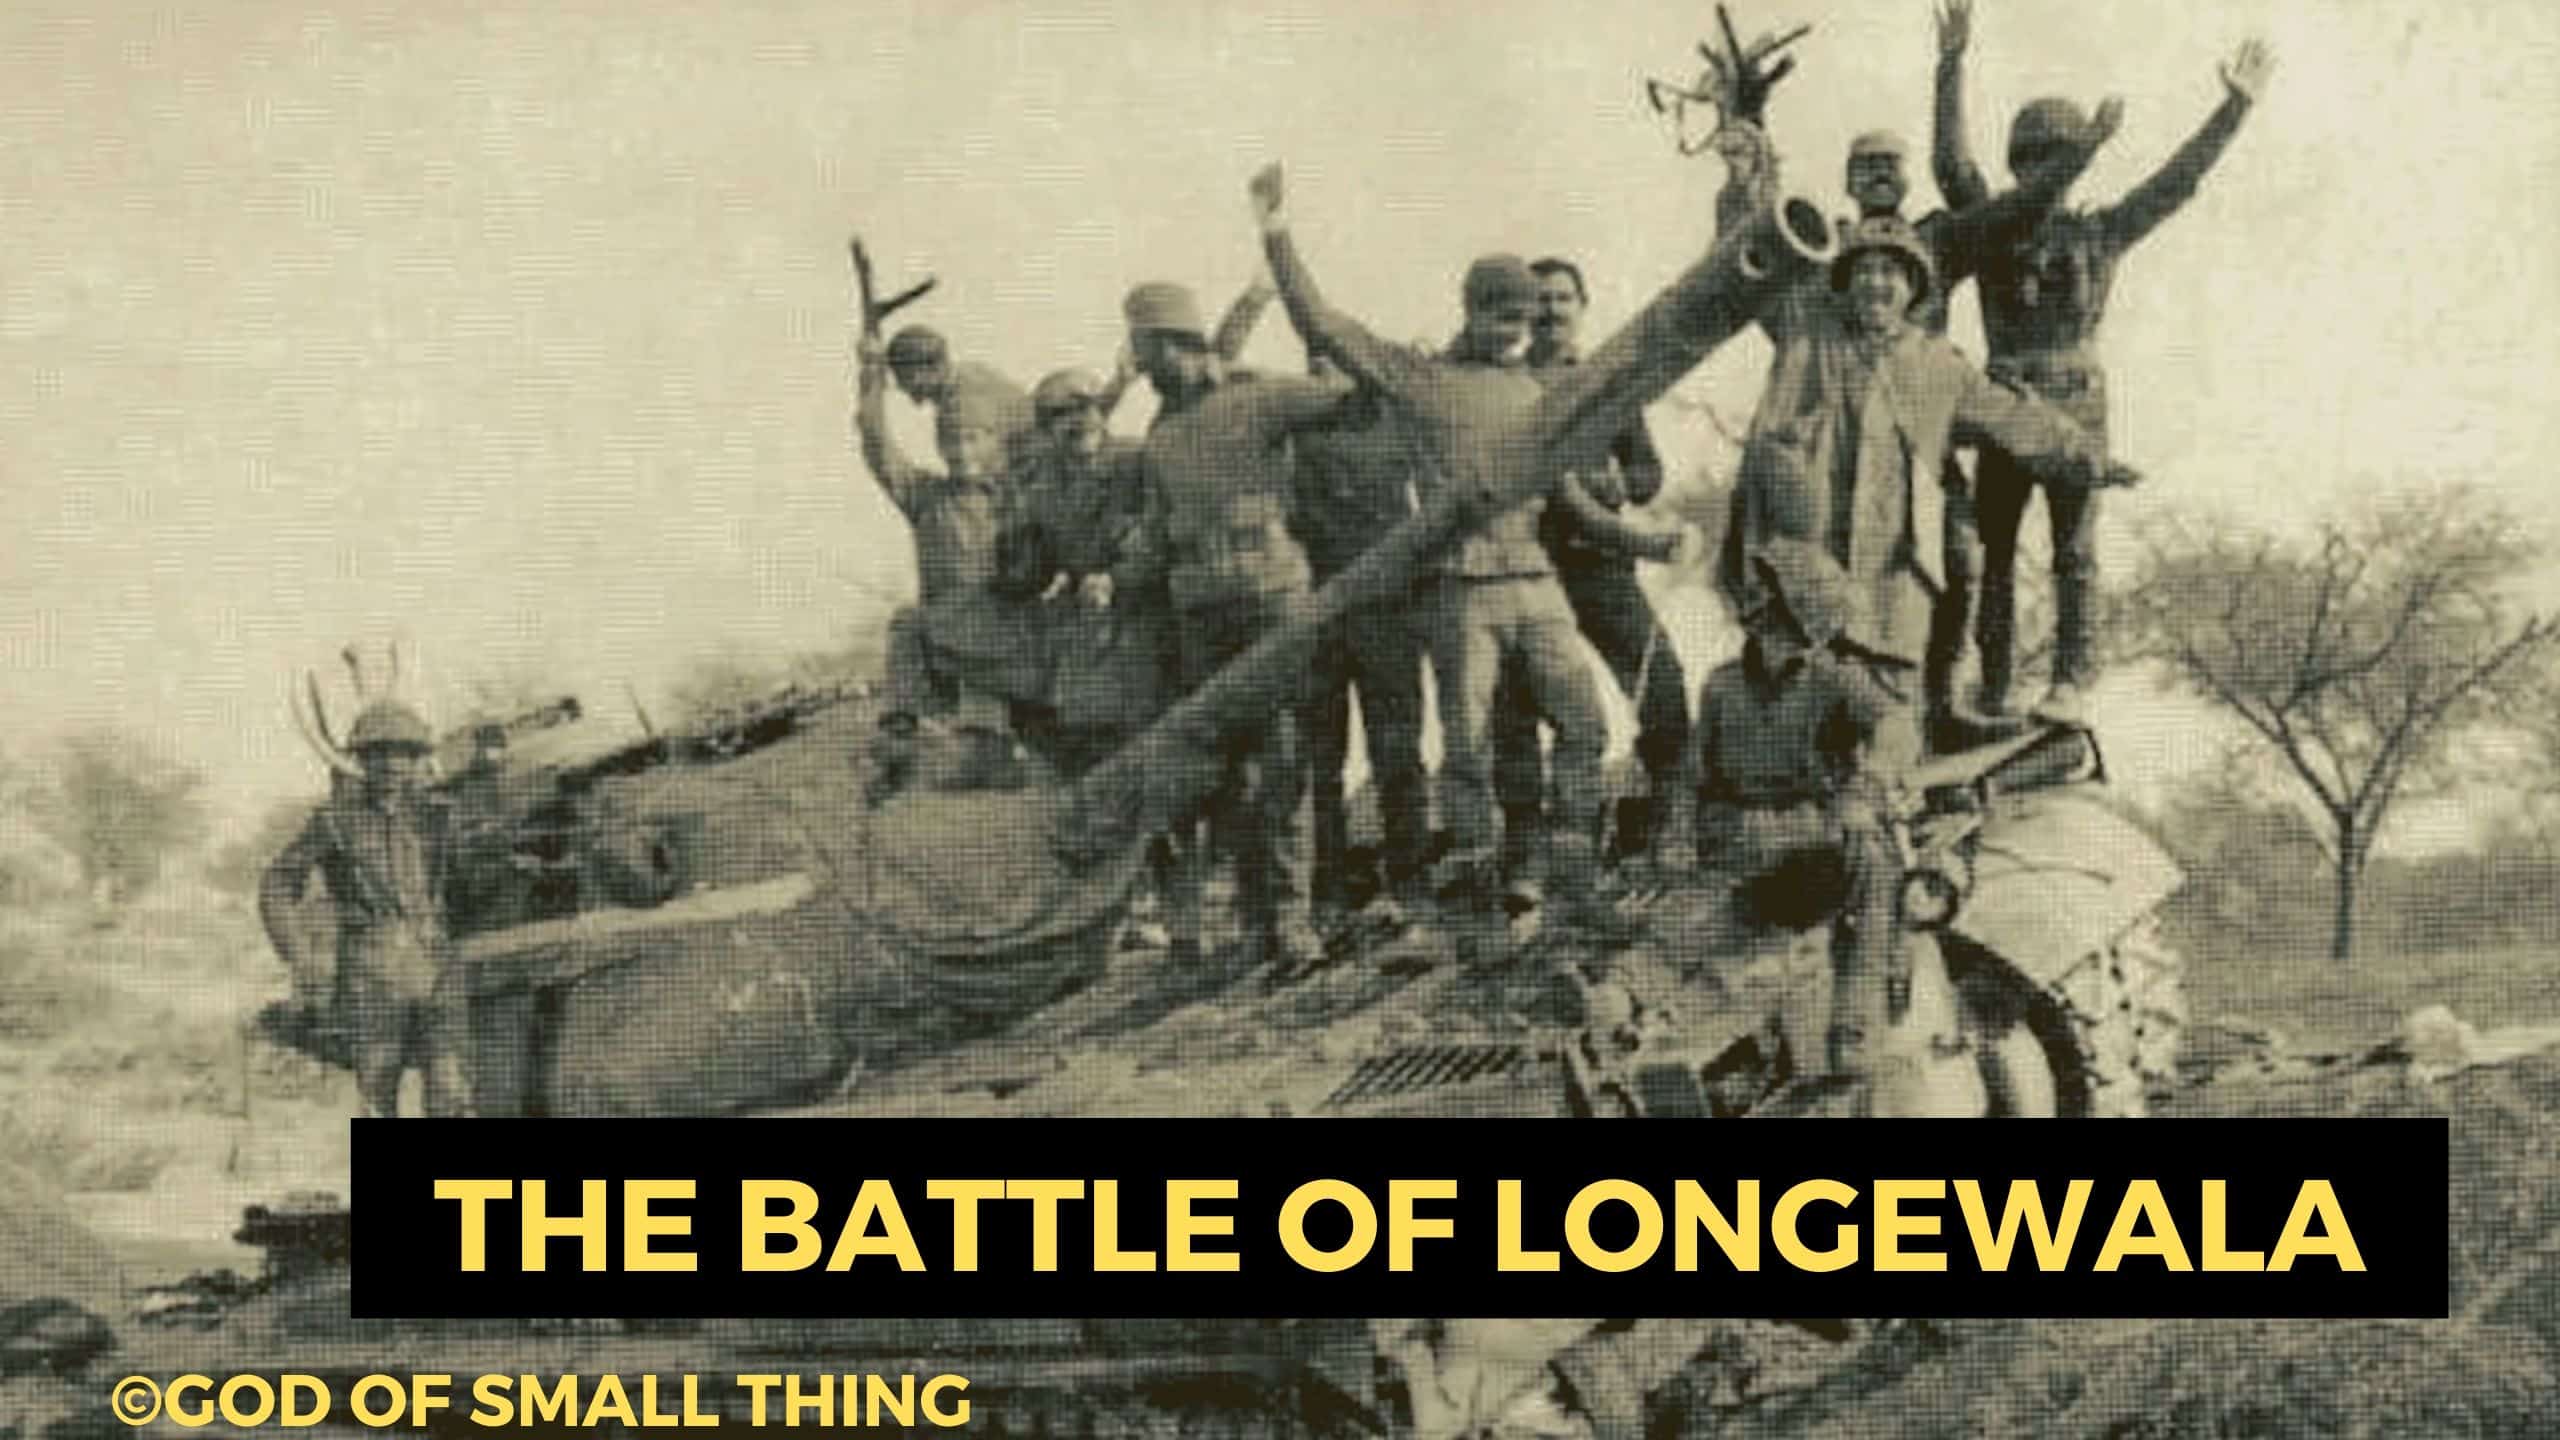 The Battle of Longewala